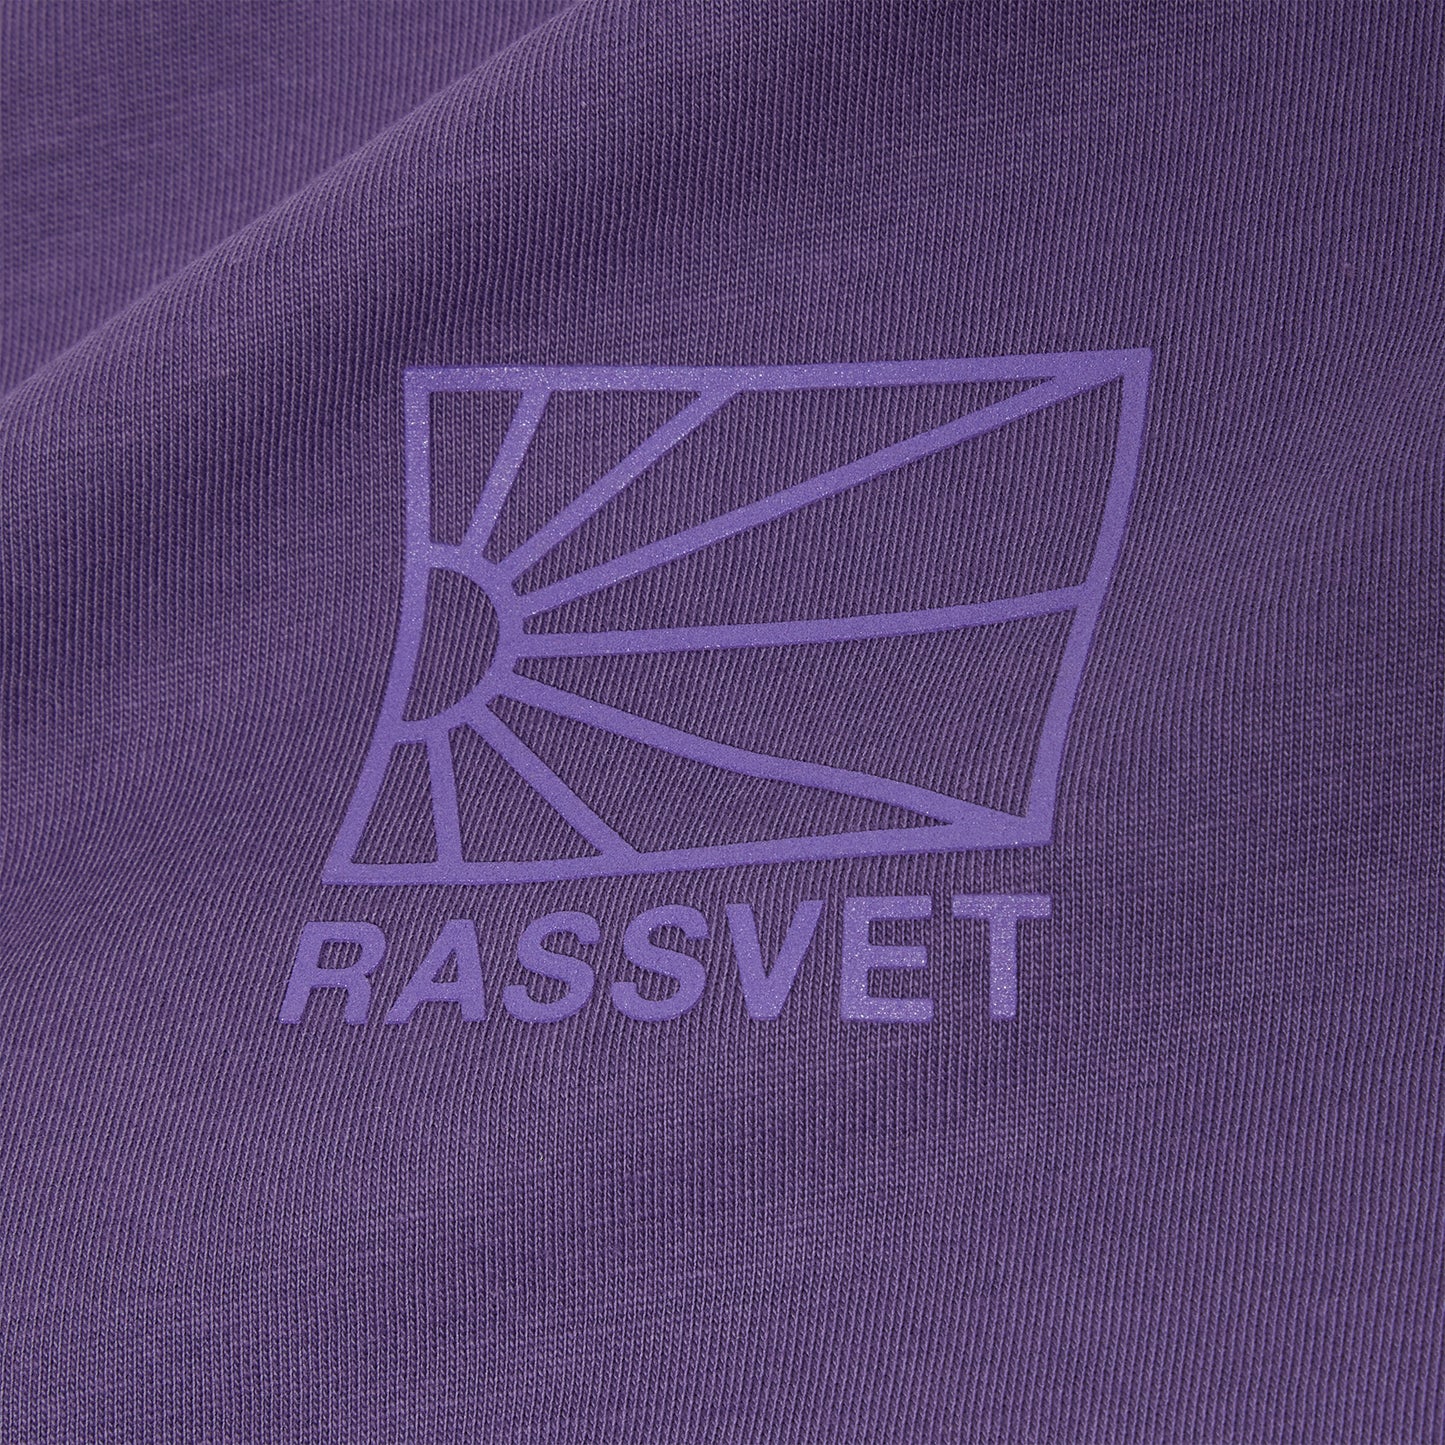 Rassvet Small Logo Knit Tee Shirt (Purple)